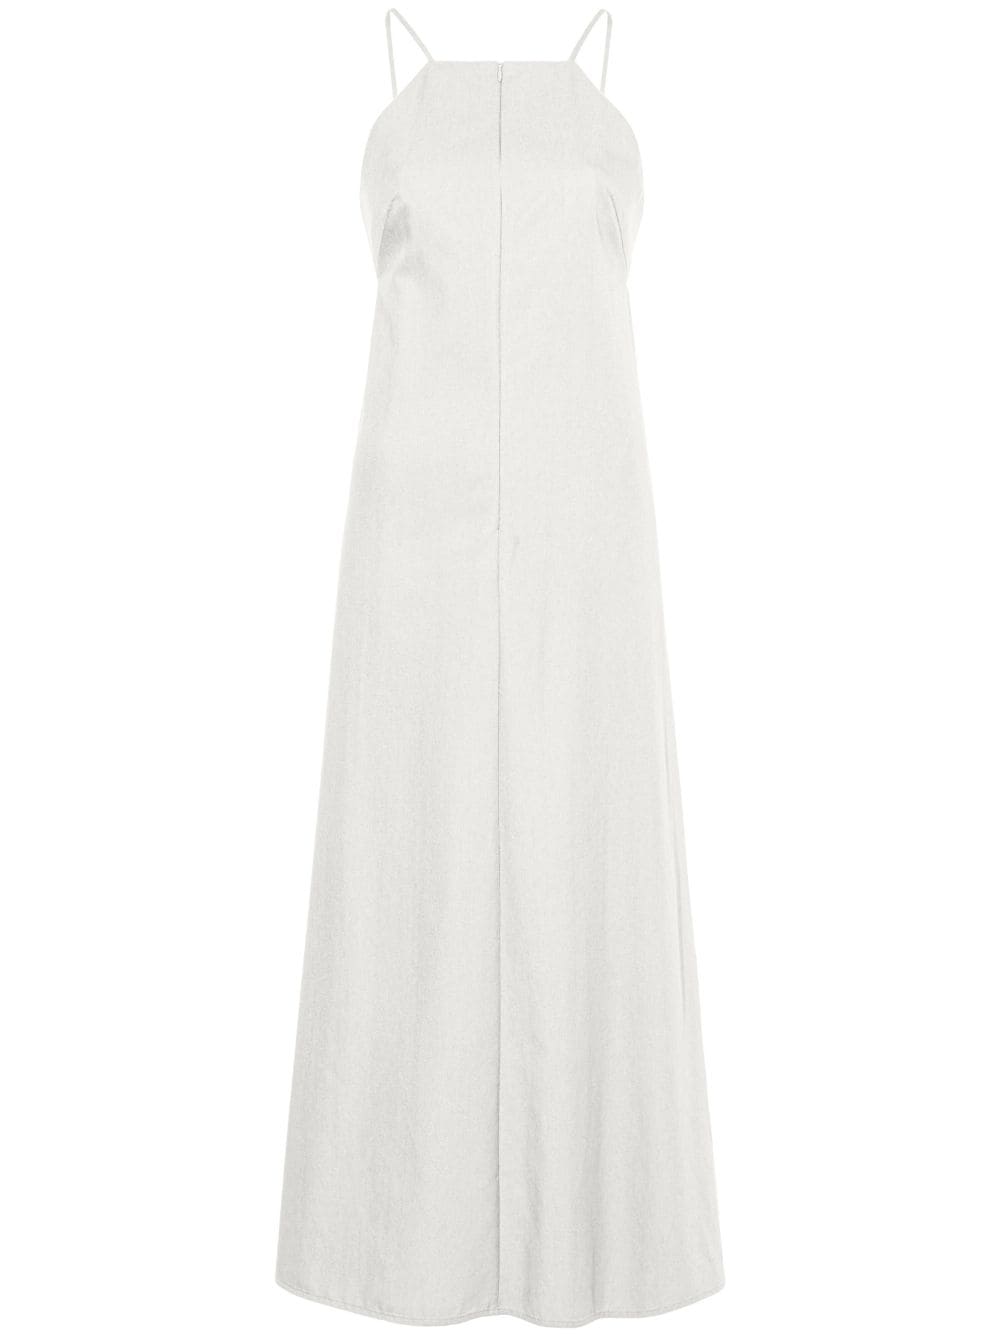 Proenza Schouler White Label Drapey cut-out dress von Proenza Schouler White Label